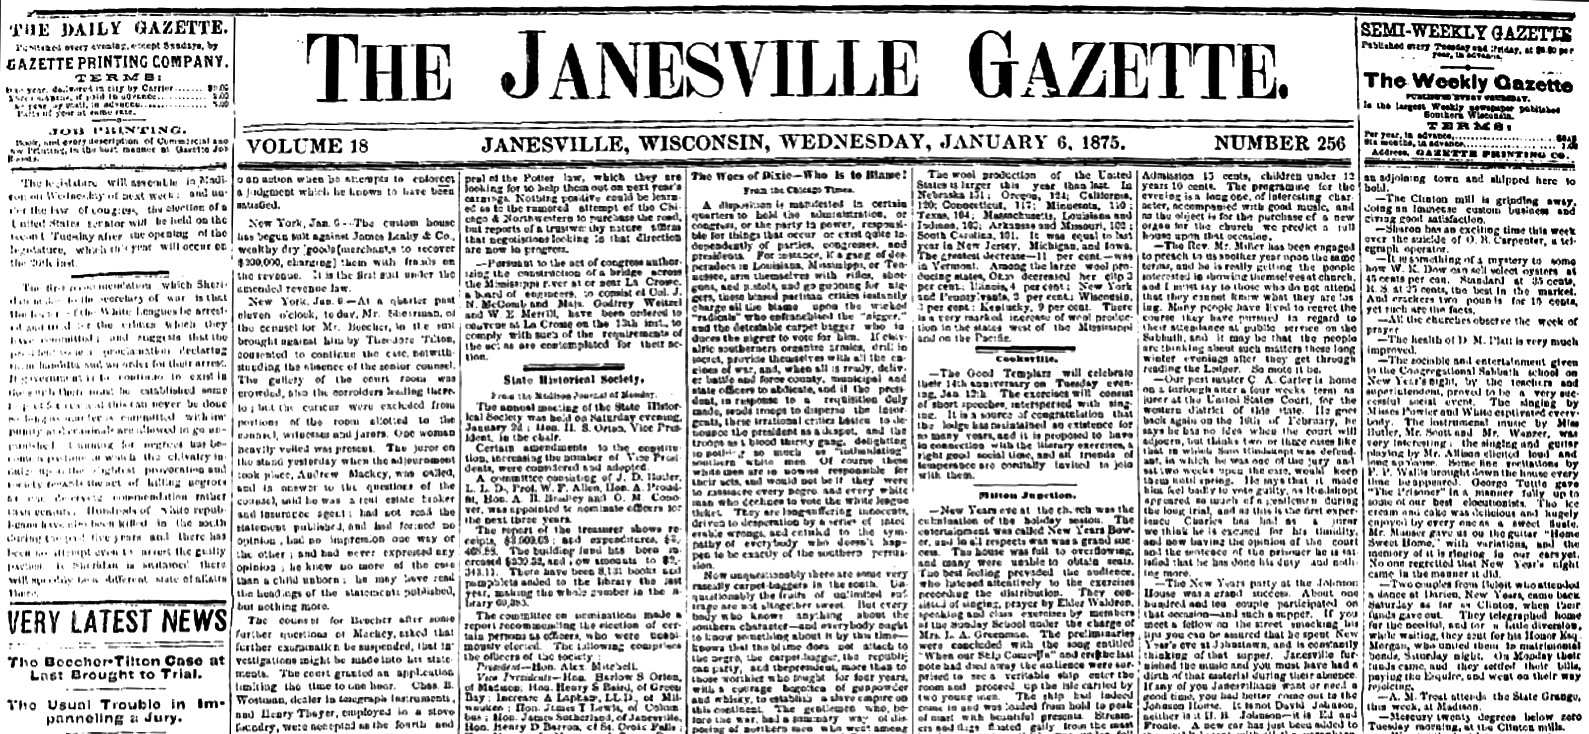 Masthead for The Janesville Gazette, January 6, 1875